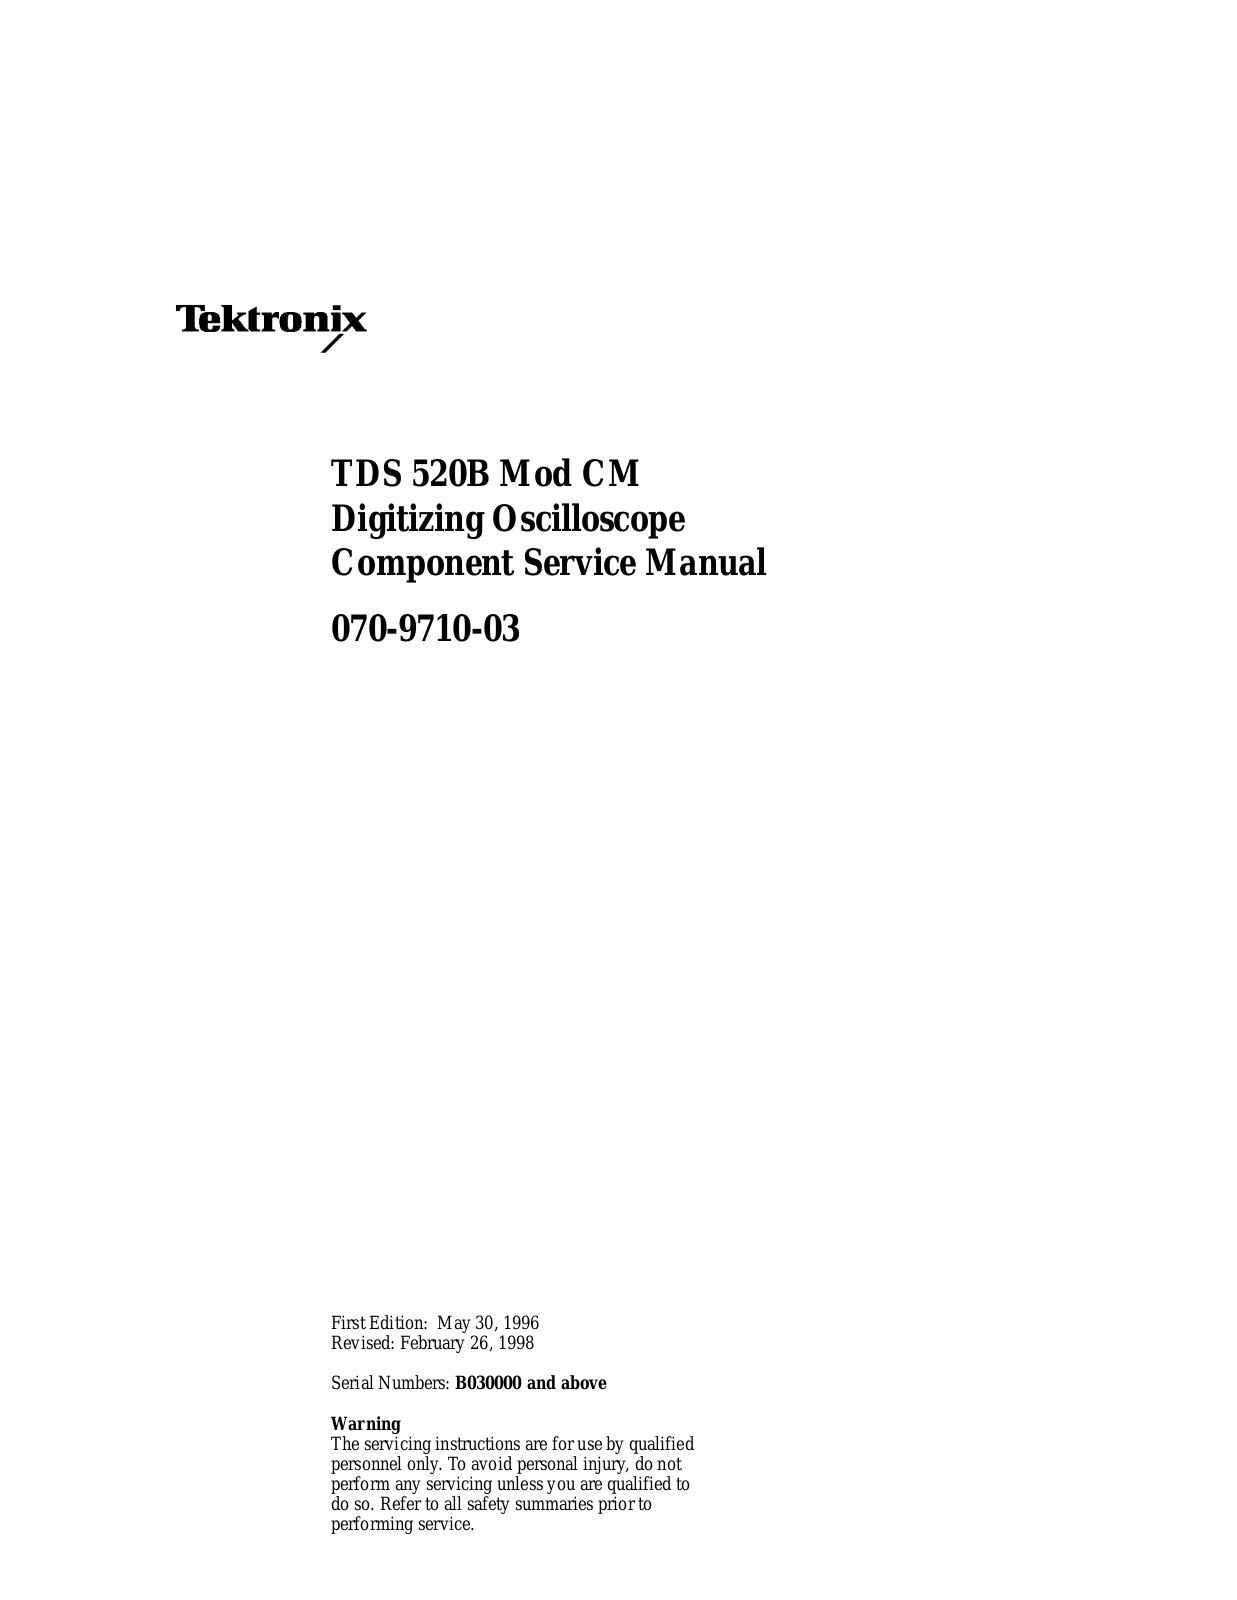 Tektronix TDS 520B Service Manual